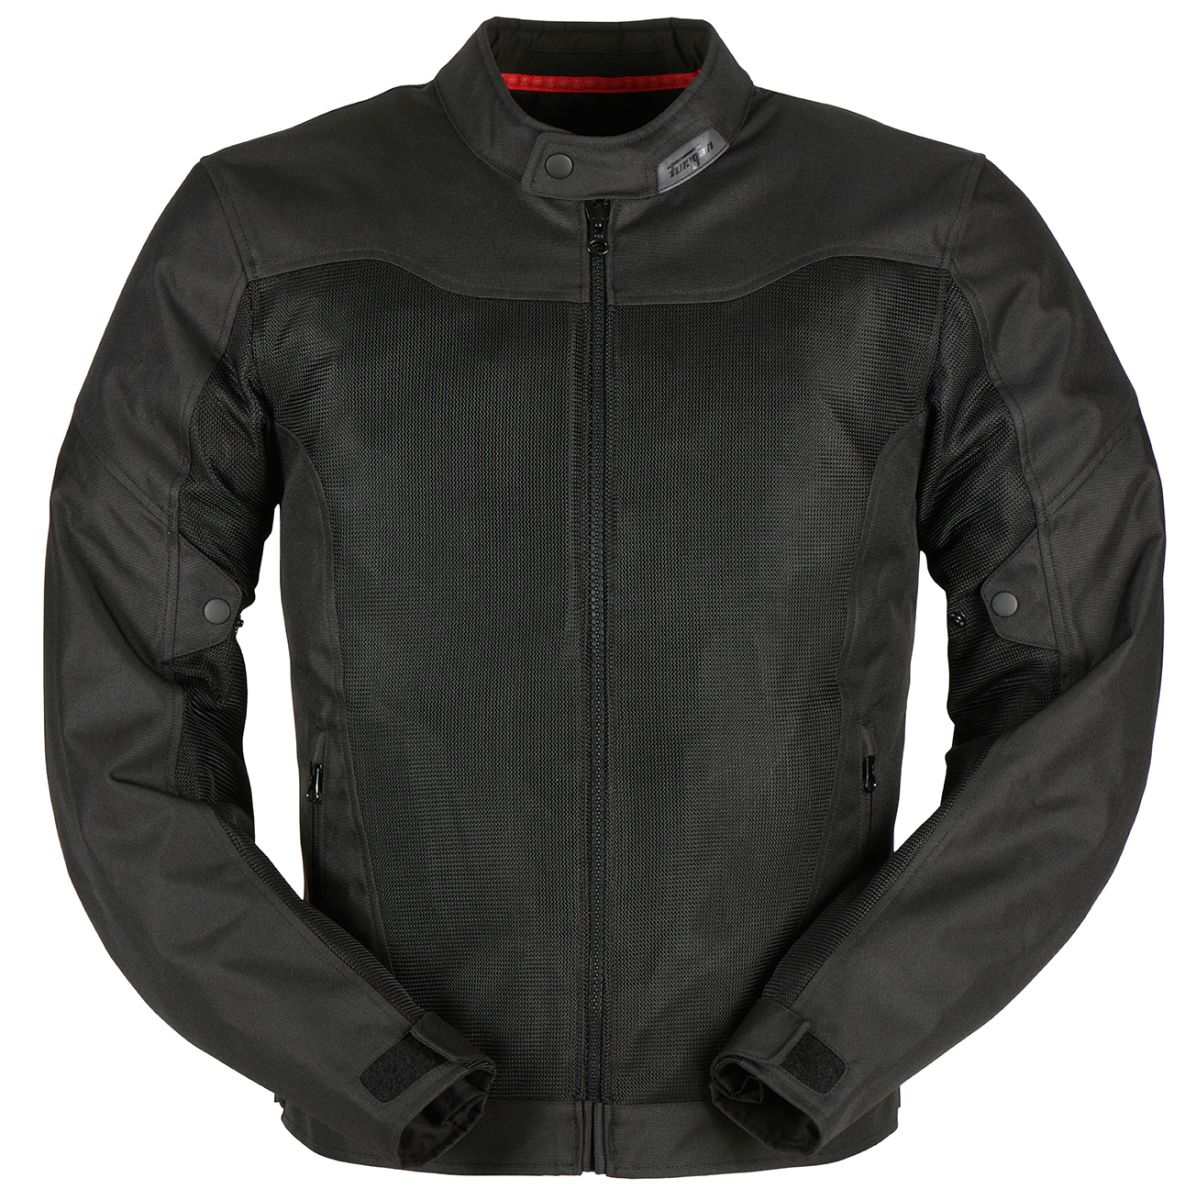 Image of Furygan Mistral 3 Evo Jacket Black Size S ID 3435980342012